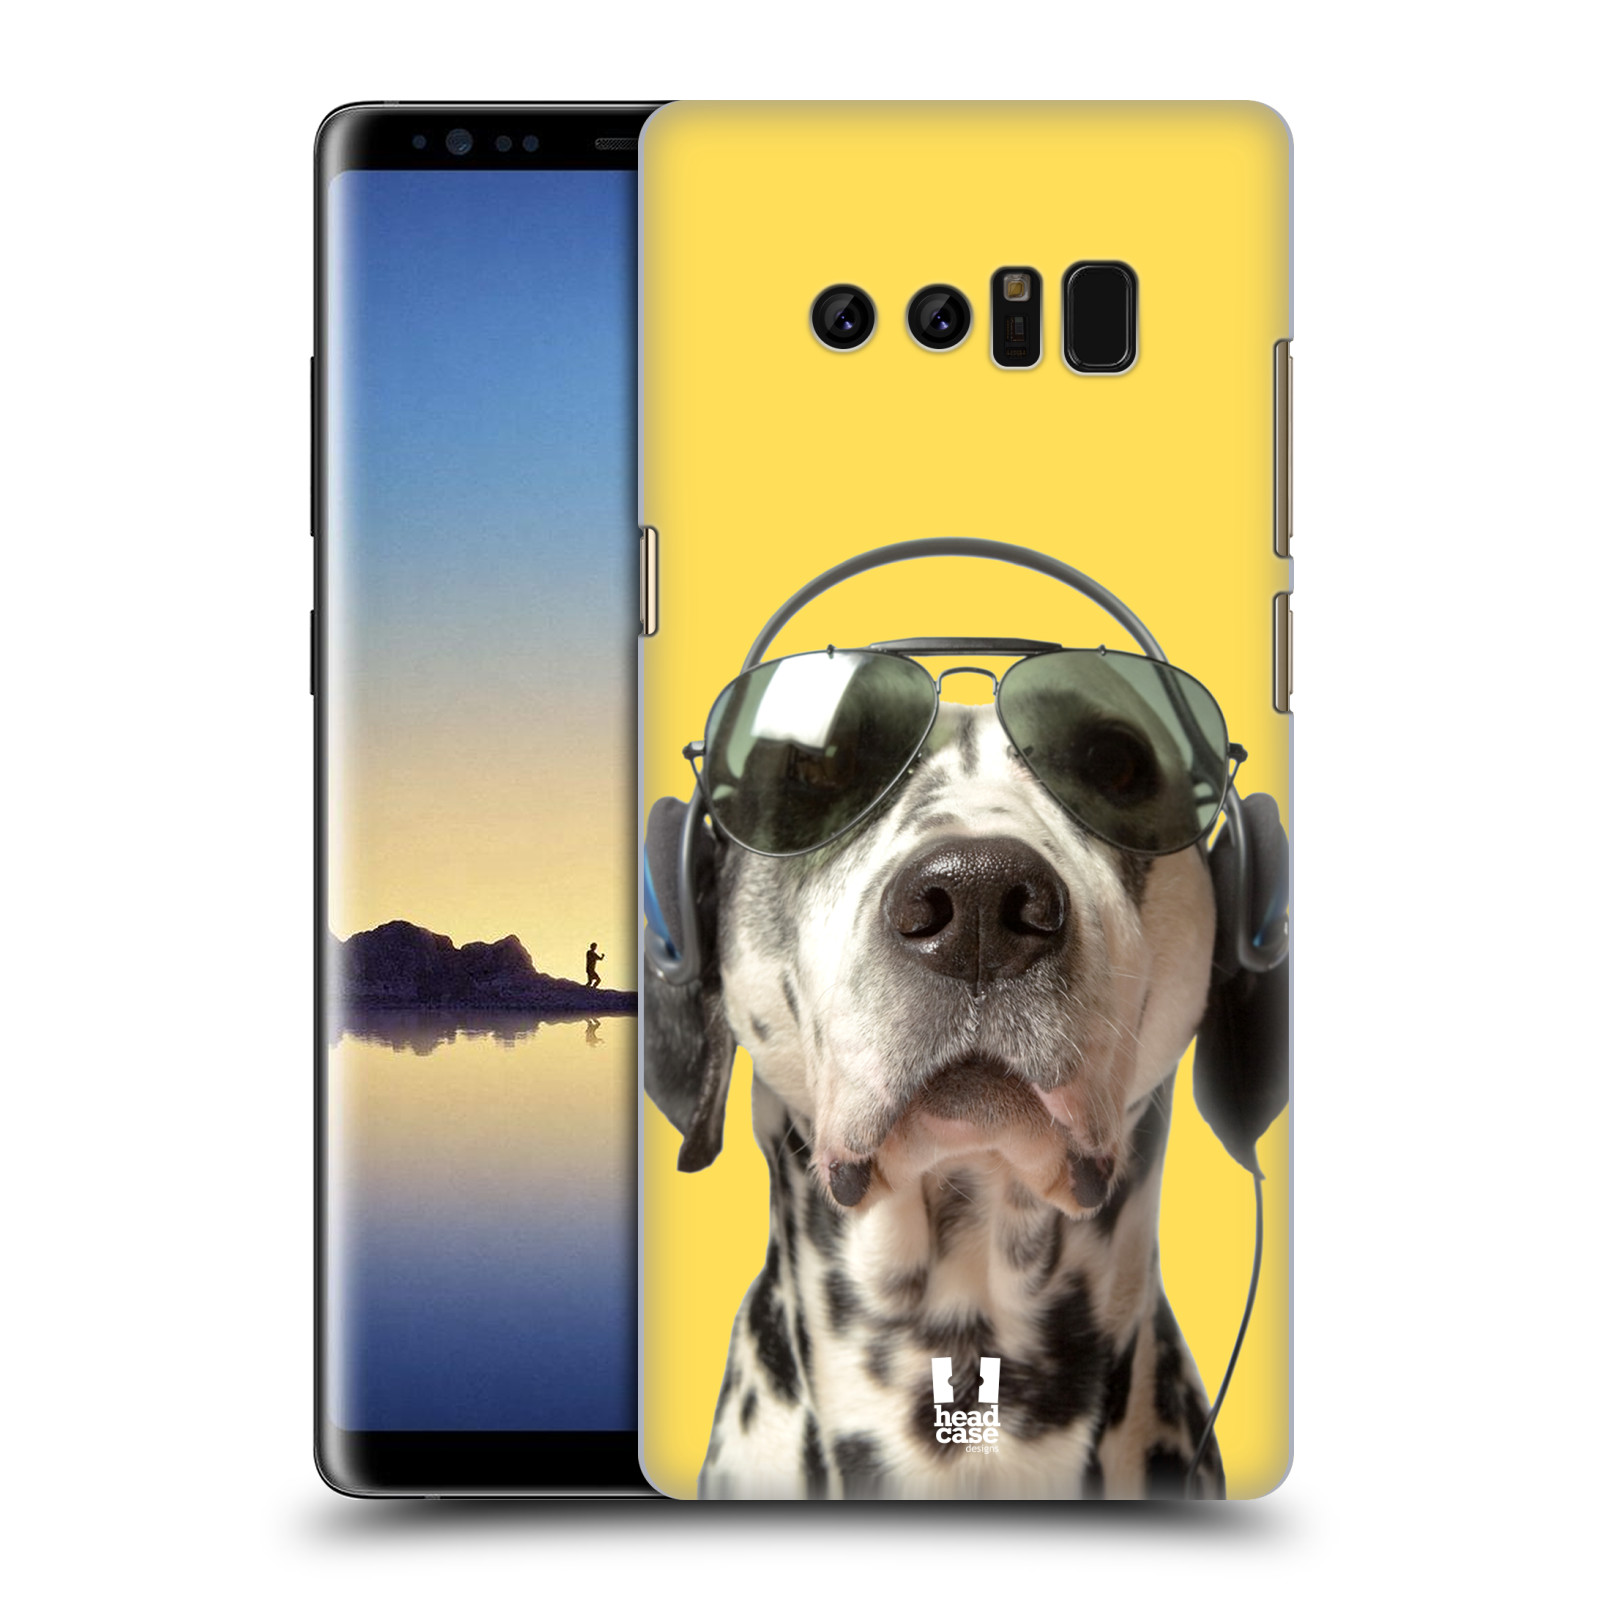 HEAD CASE plastový obal na mobil Samsung Galaxy Note 8 vzor Legrační zvířátka dalmatin se sluchátky žlutá